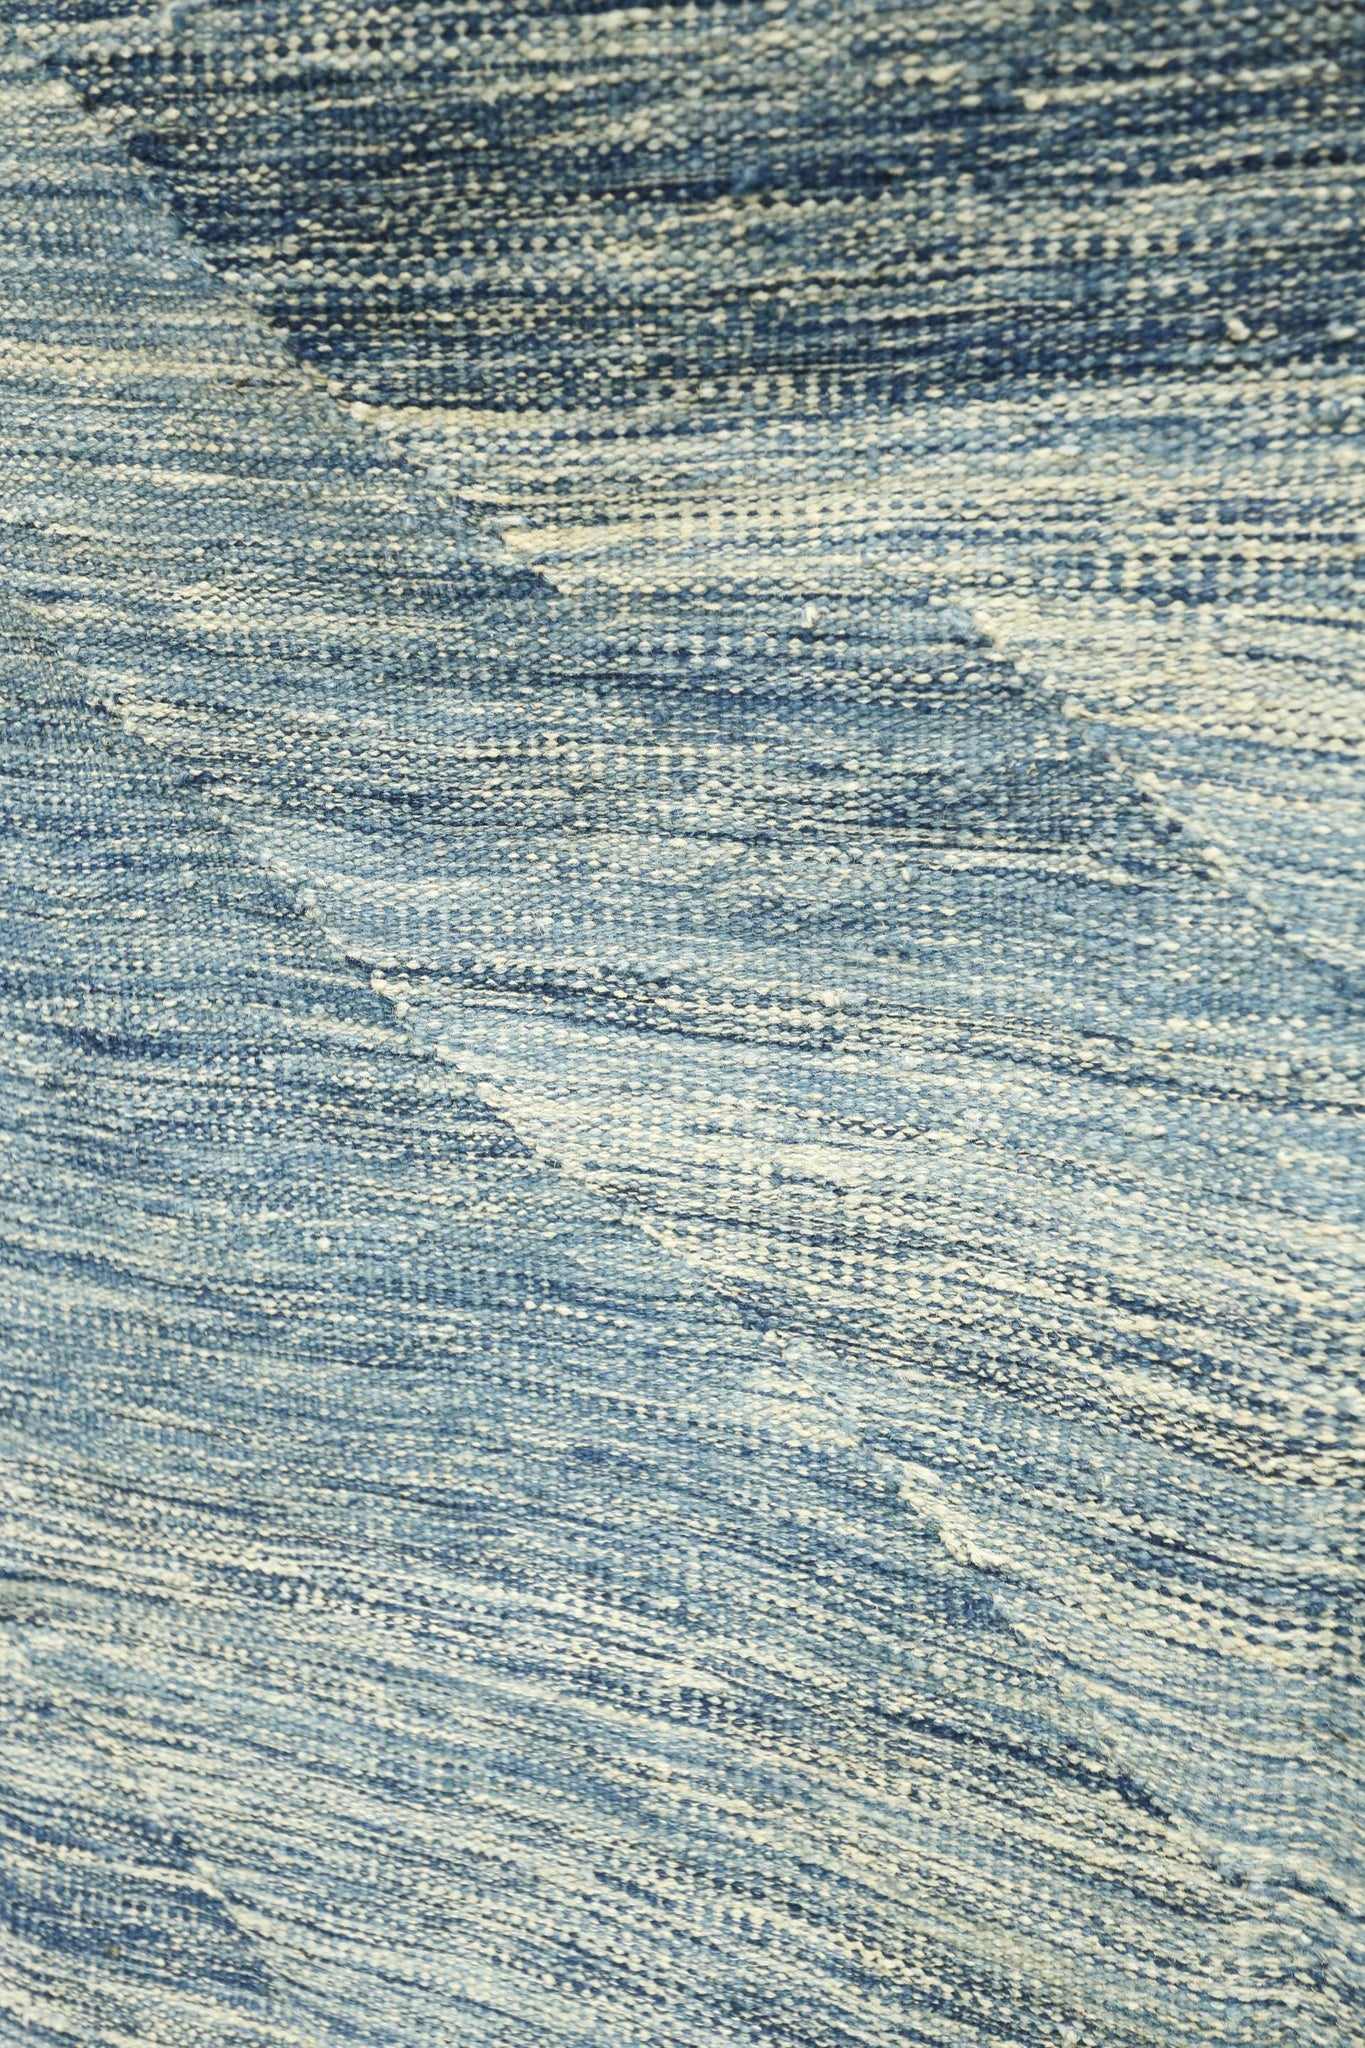 Large 20th century plain kilim in blue